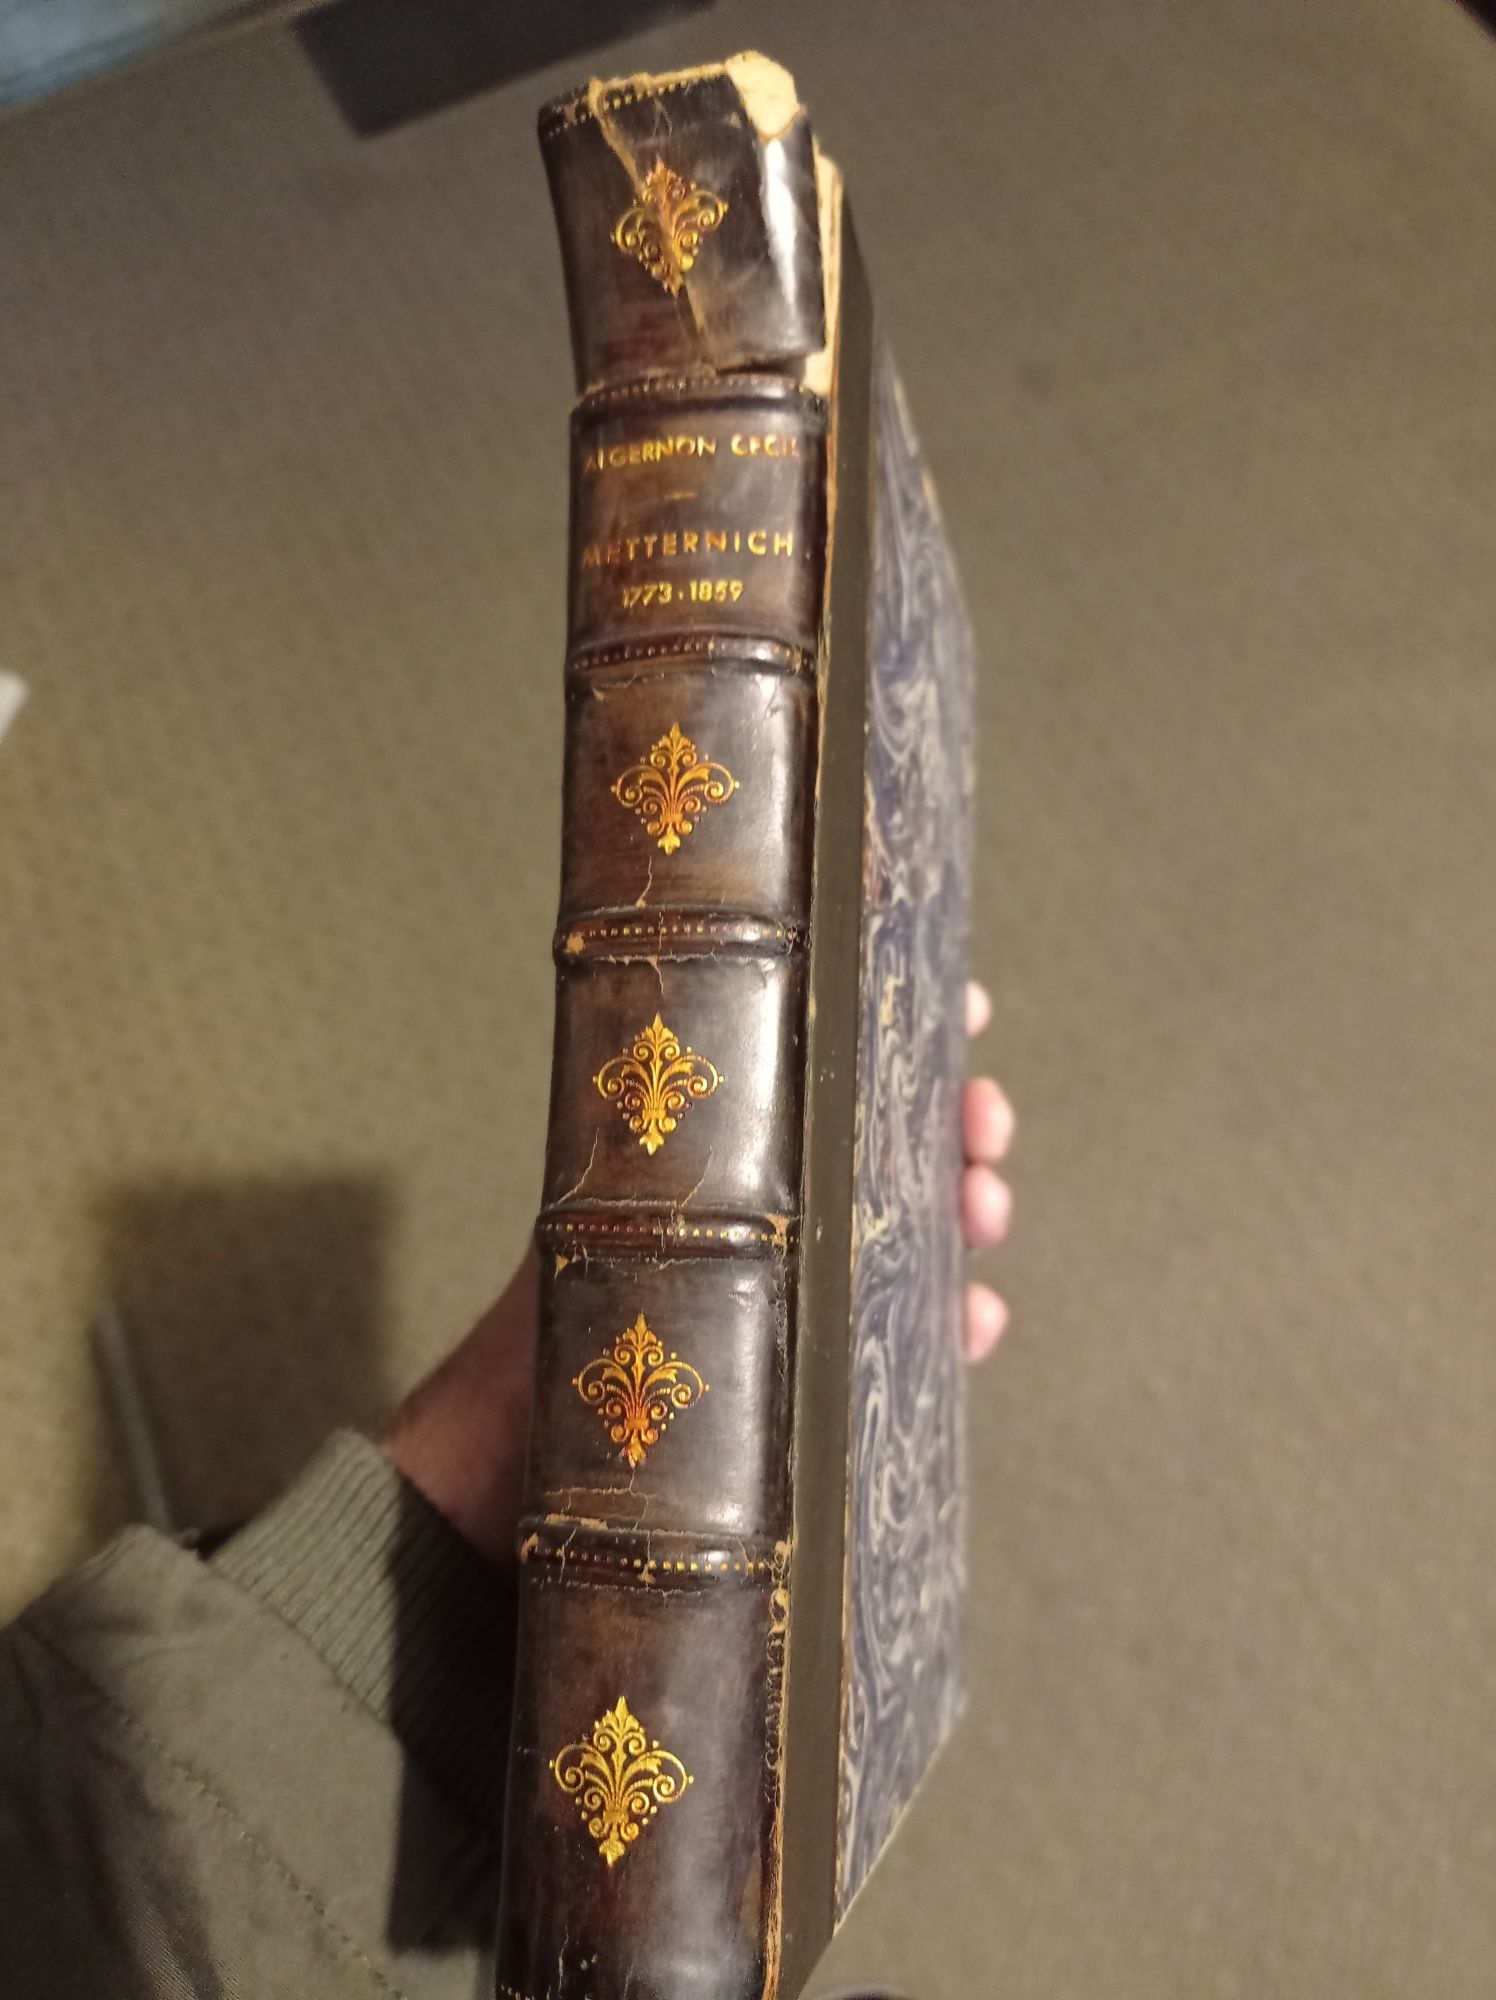 Livro antigo Metternich de Algernon Cecil